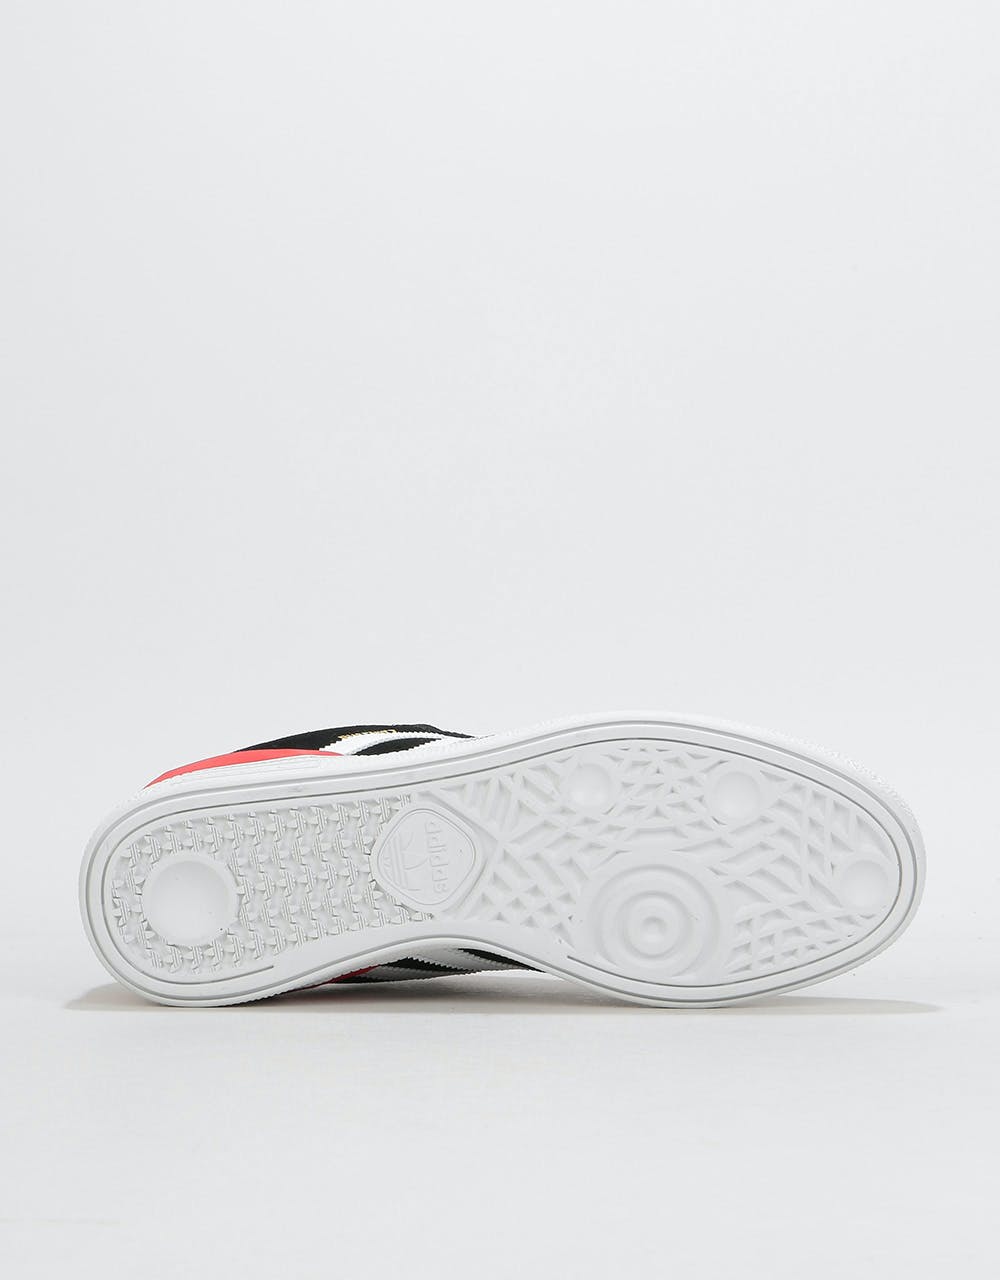 Adidas Busenitz Pro Skate Shoes - Core Black/White/Scarlet